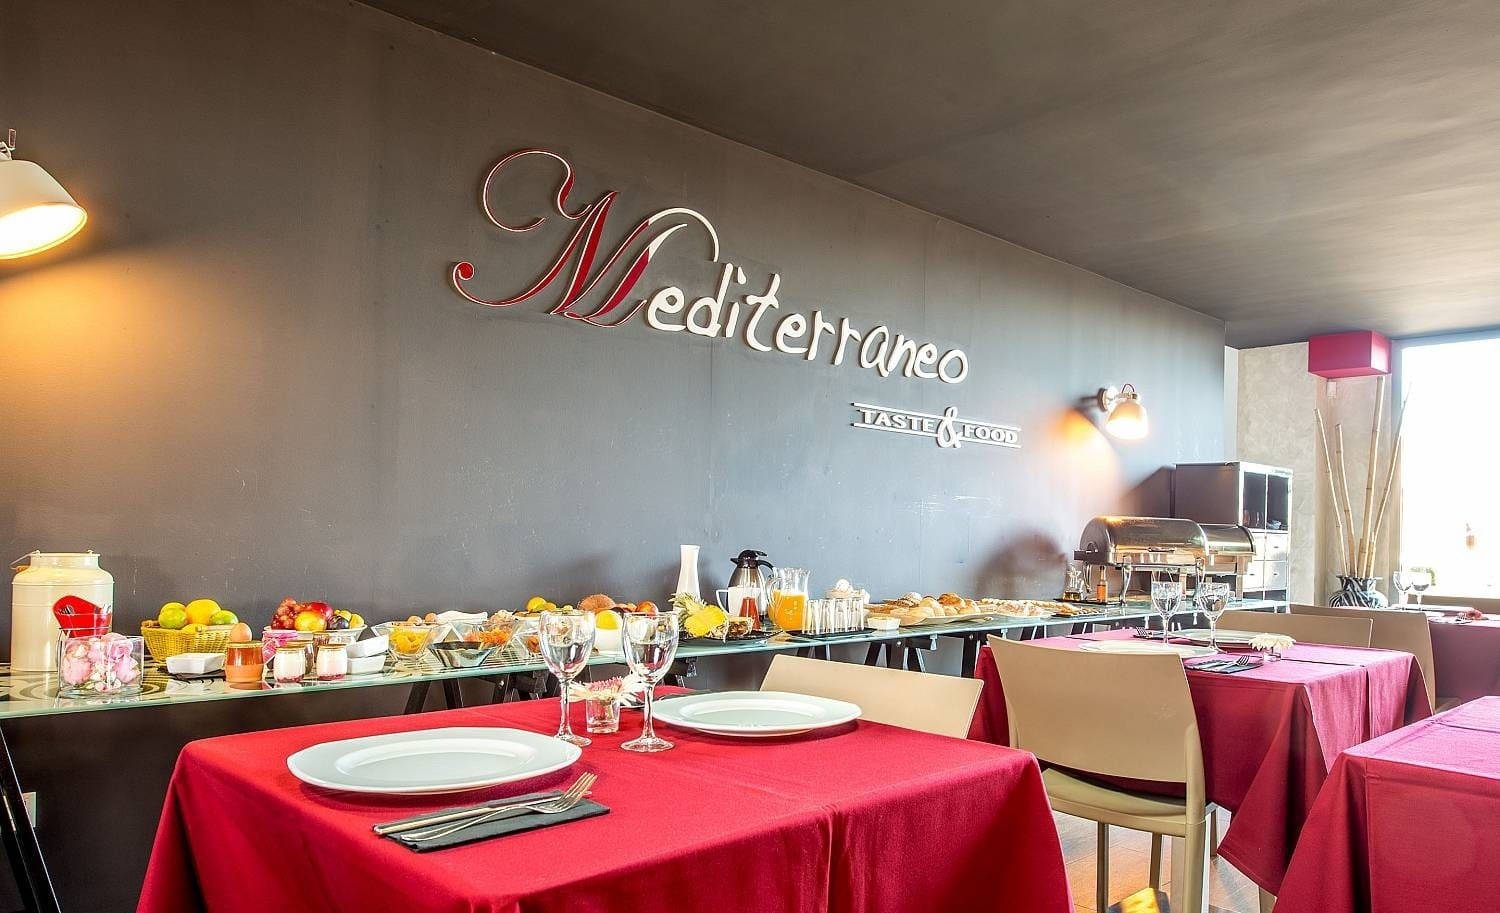 El Mediterráneo restaurant at the Ona Aucanada hotel in the North of Majorca